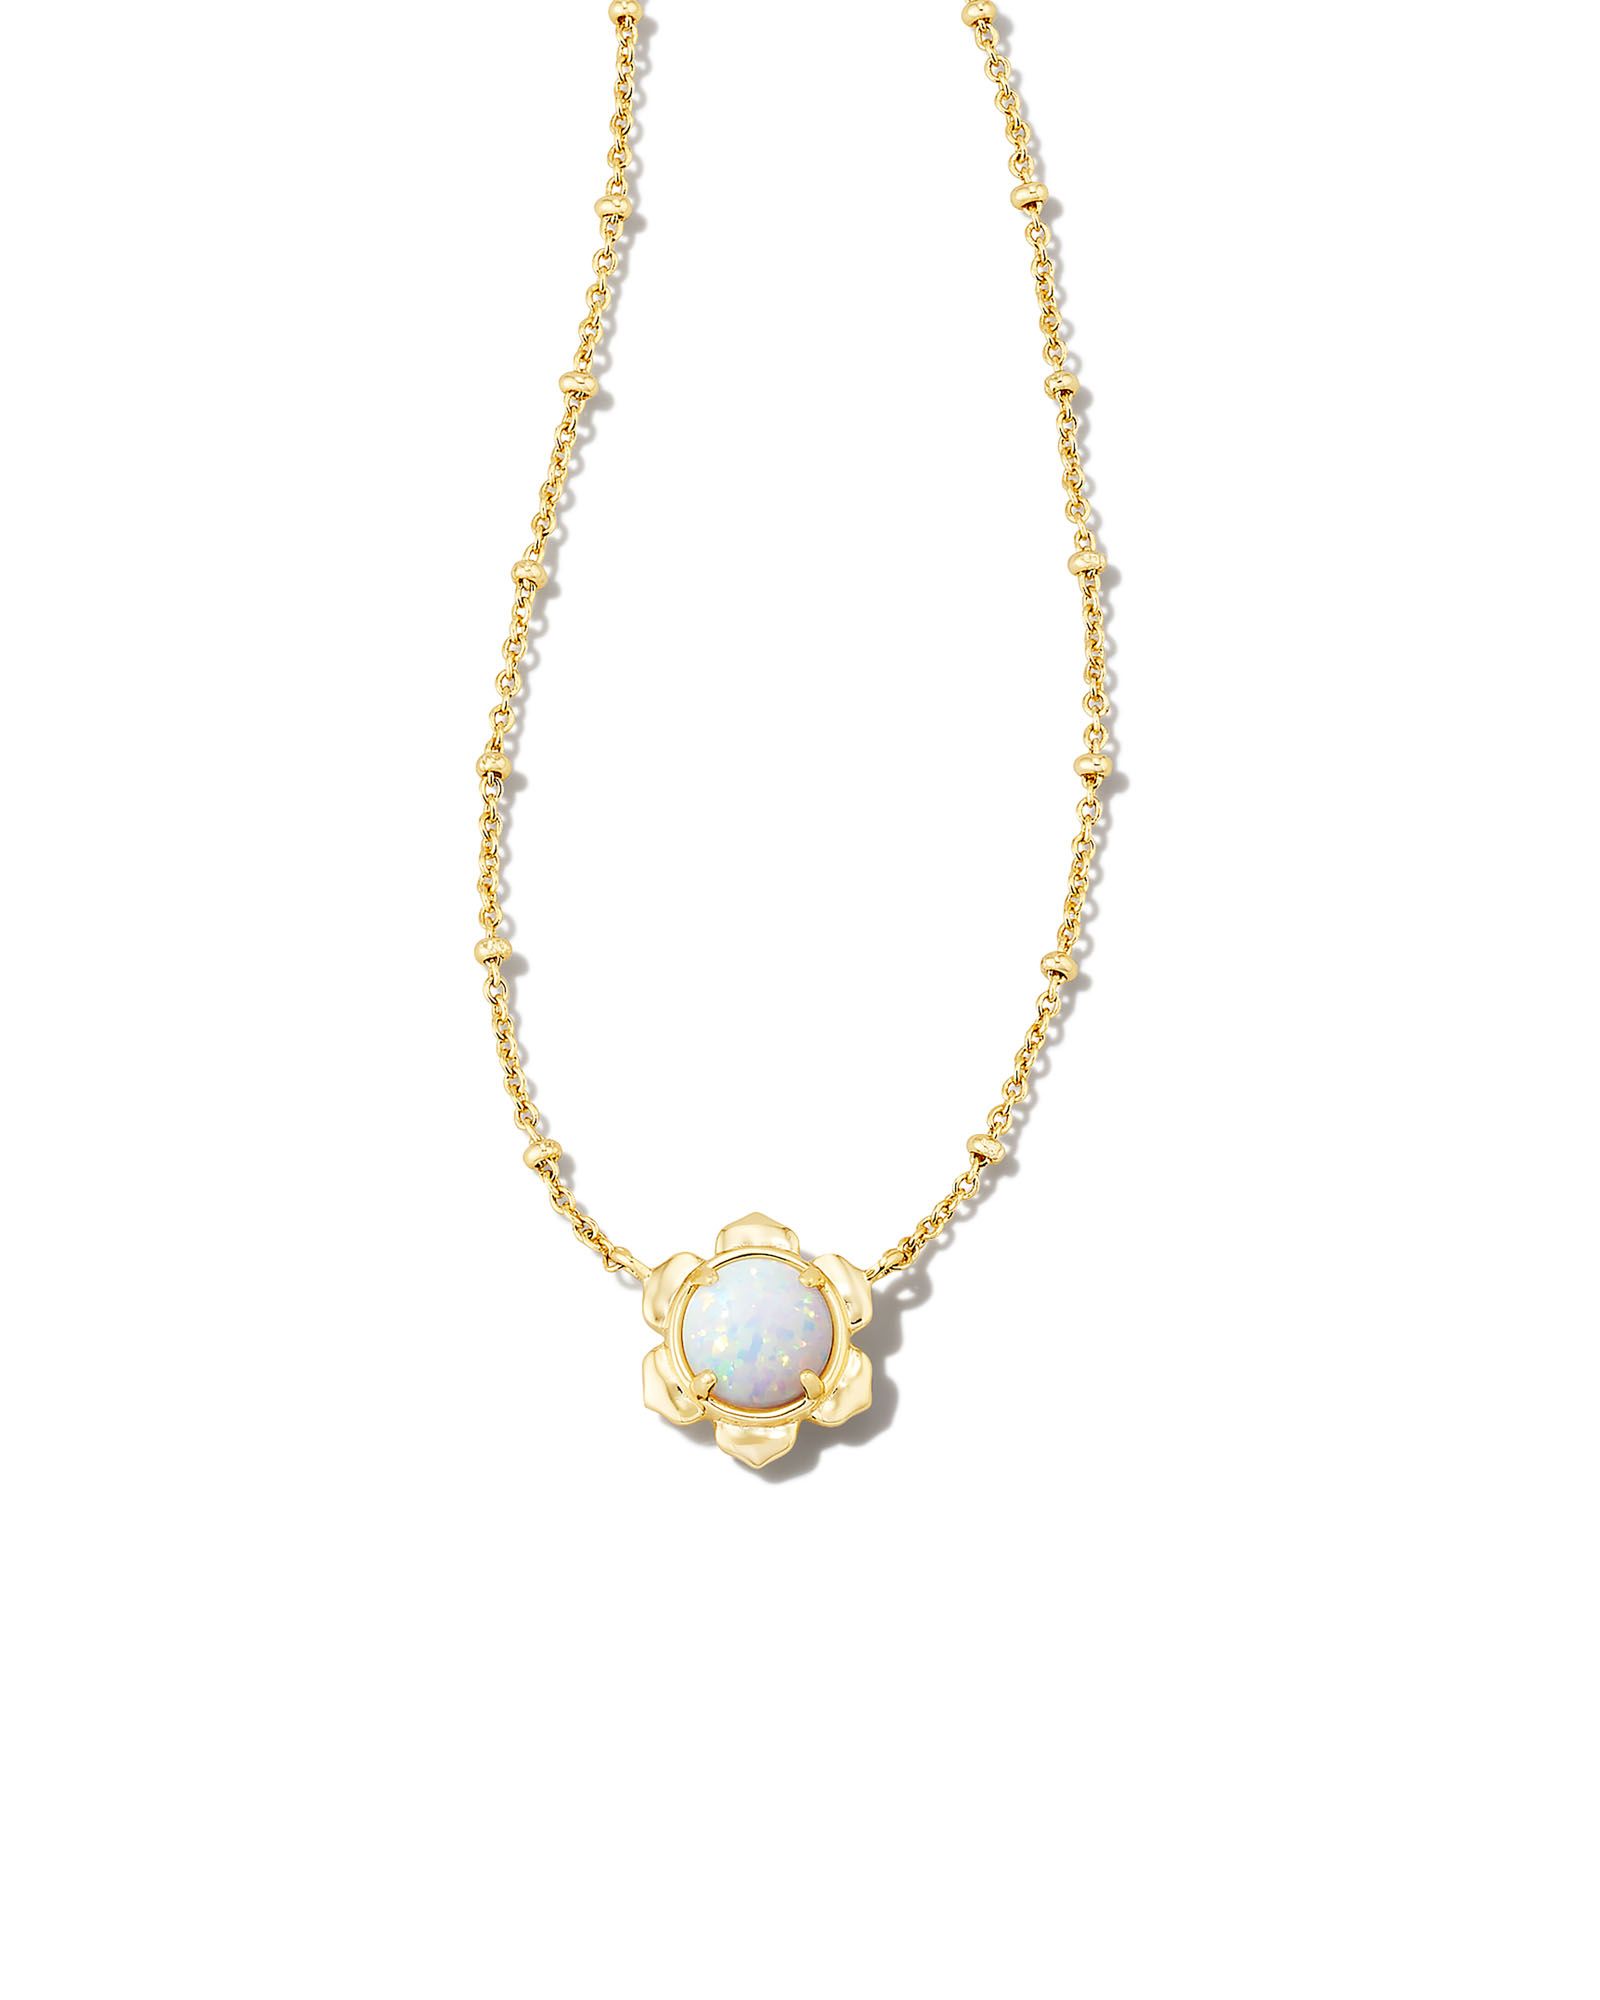 Susie Gold Short Pendant Necklace in Bright White Kyocera Opal | Kendra Scott | Kendra Scott